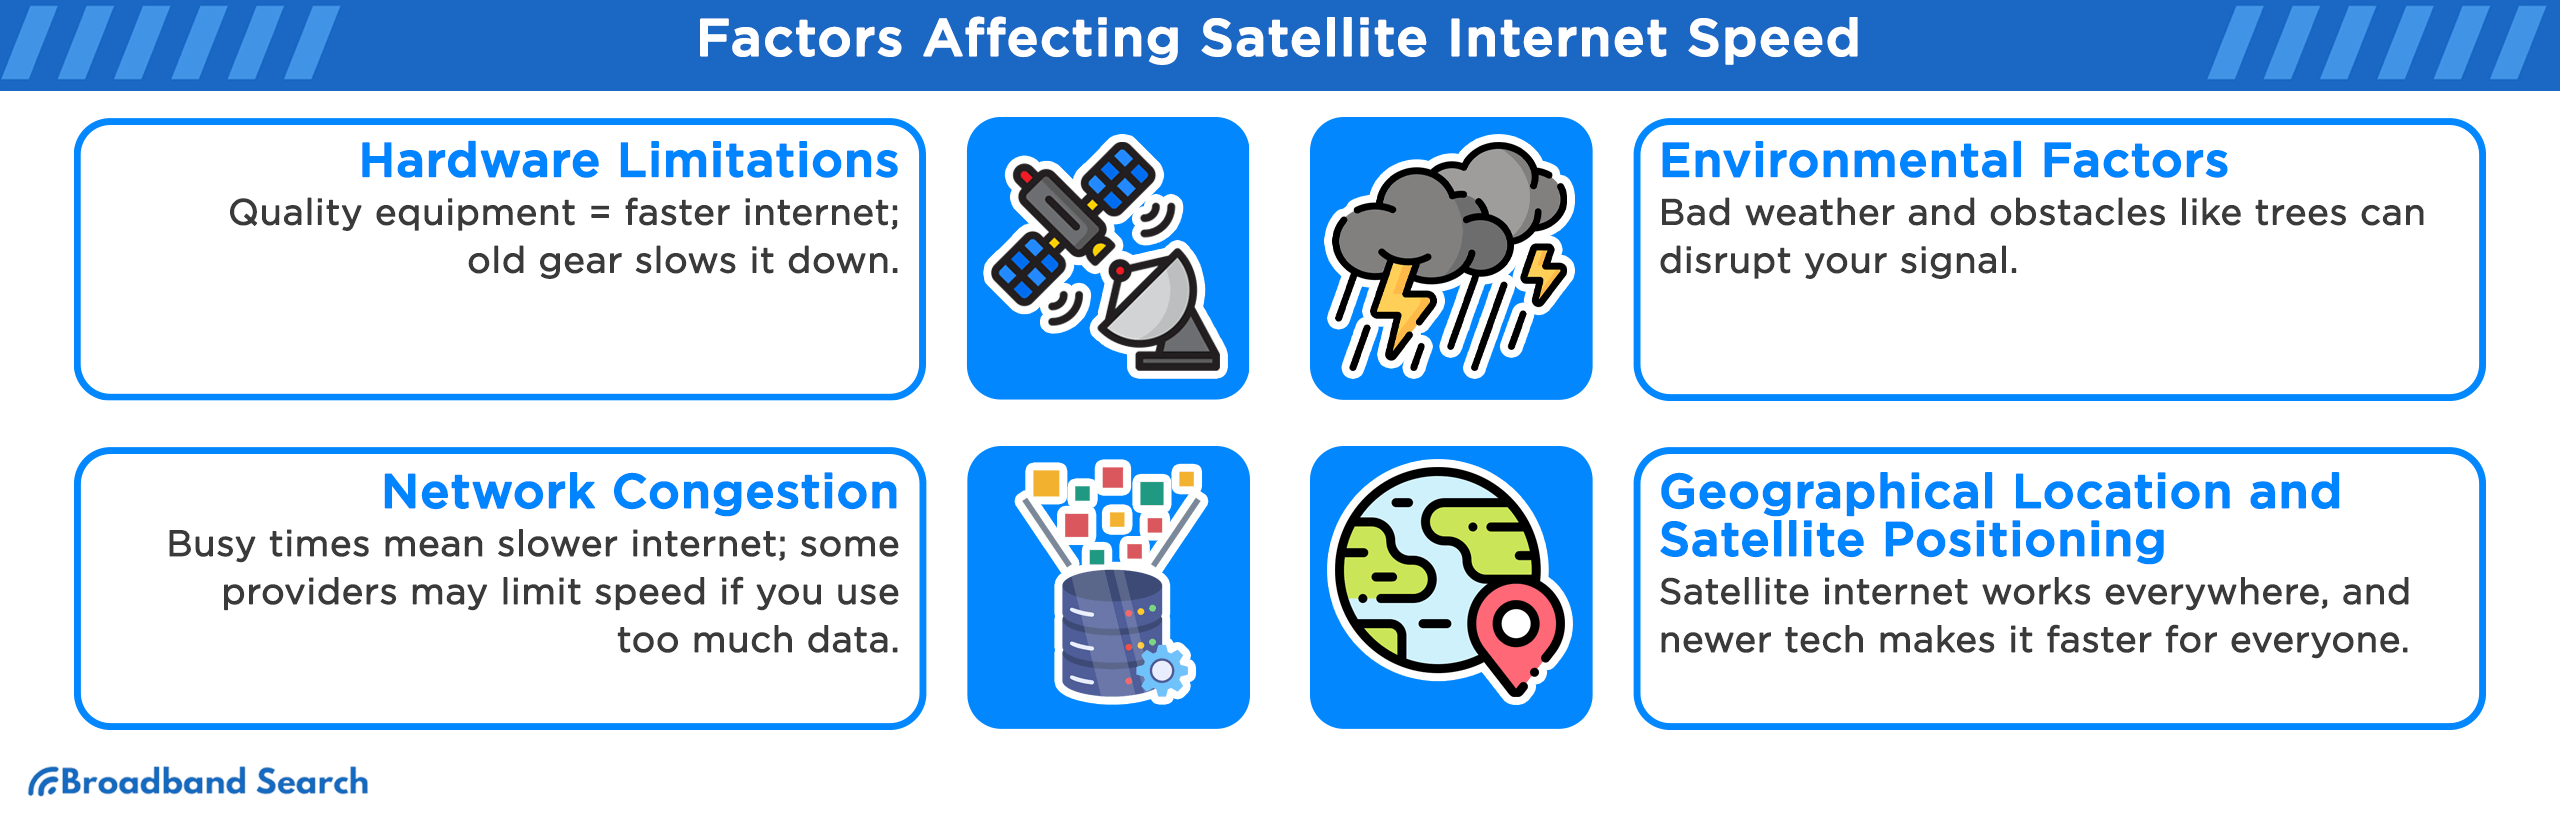 Factors affecting satellite internet speed